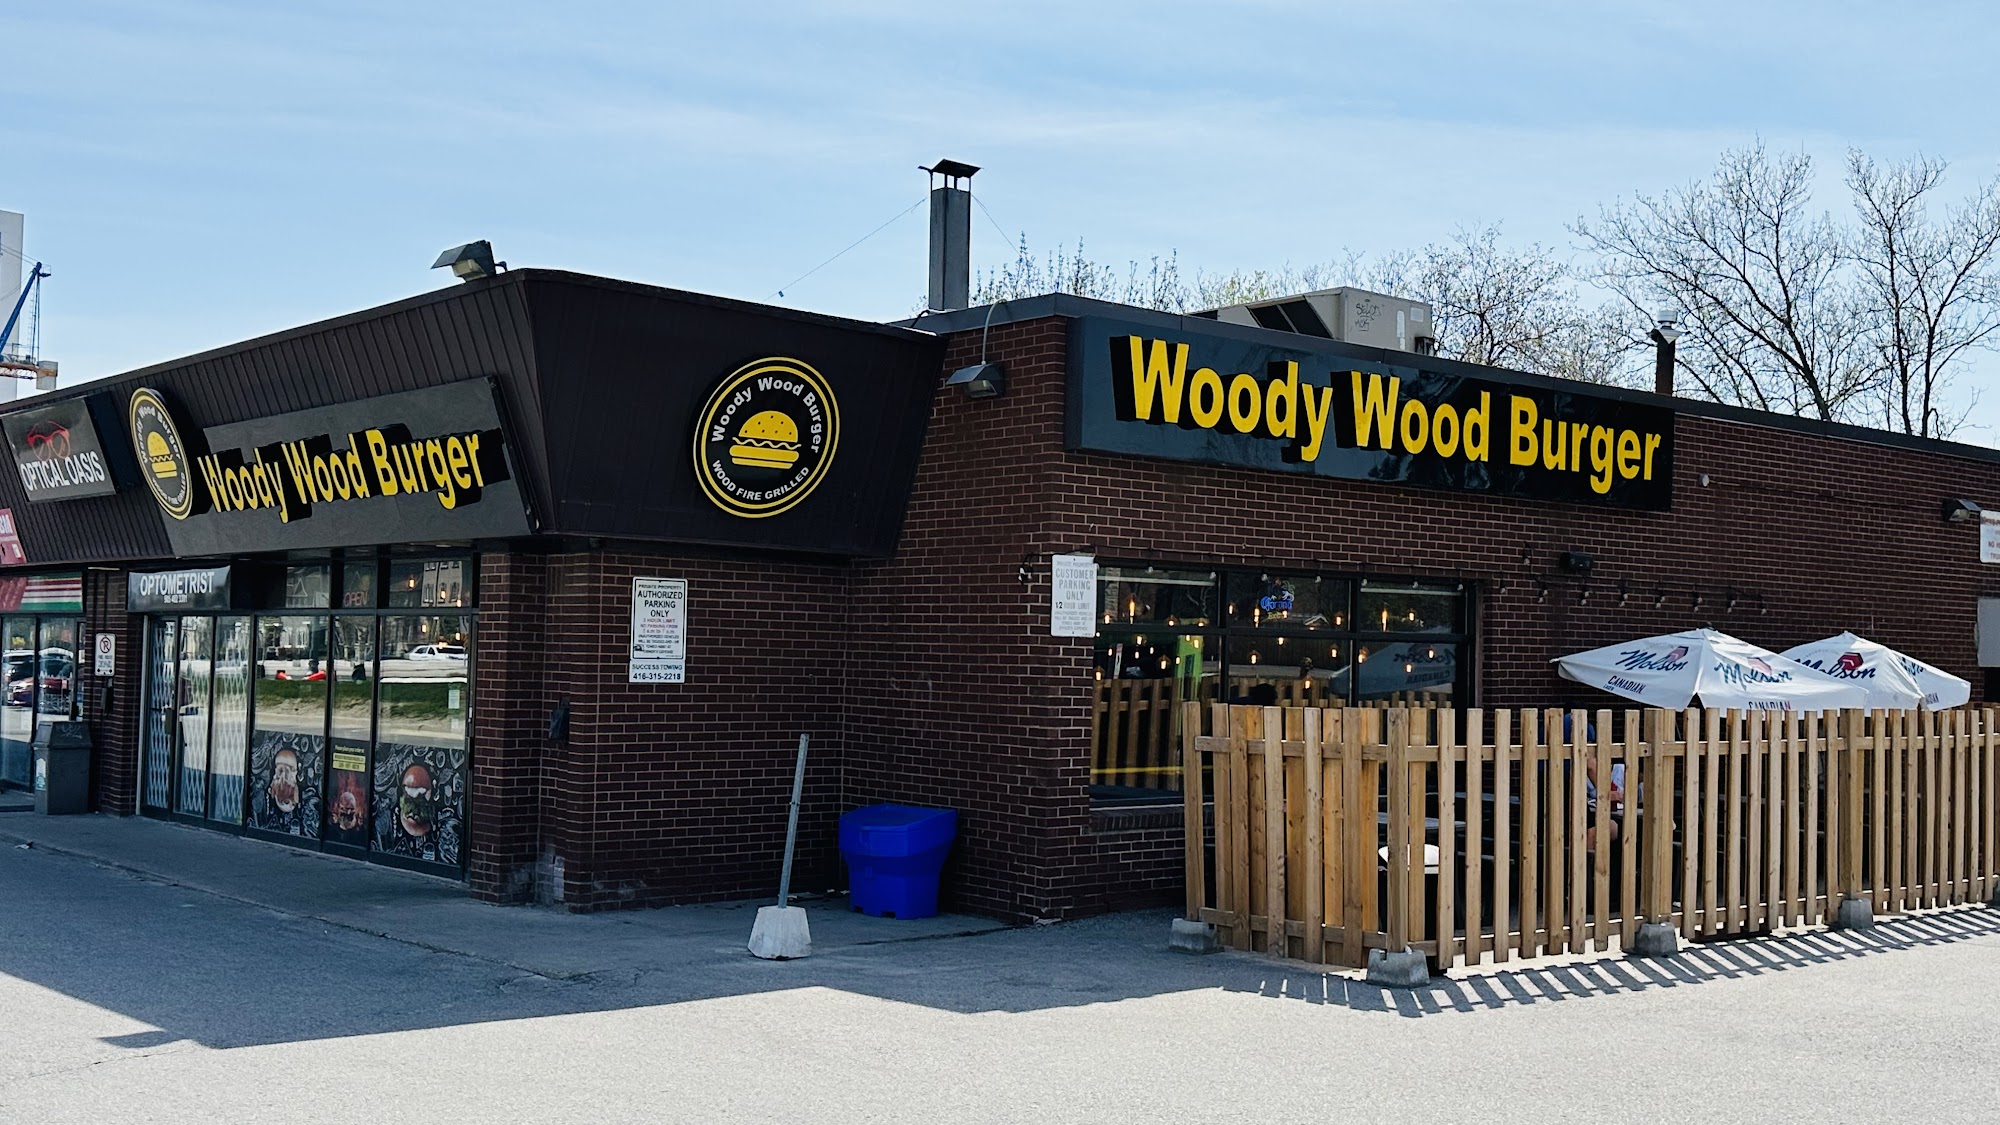 Woody Wood Burger